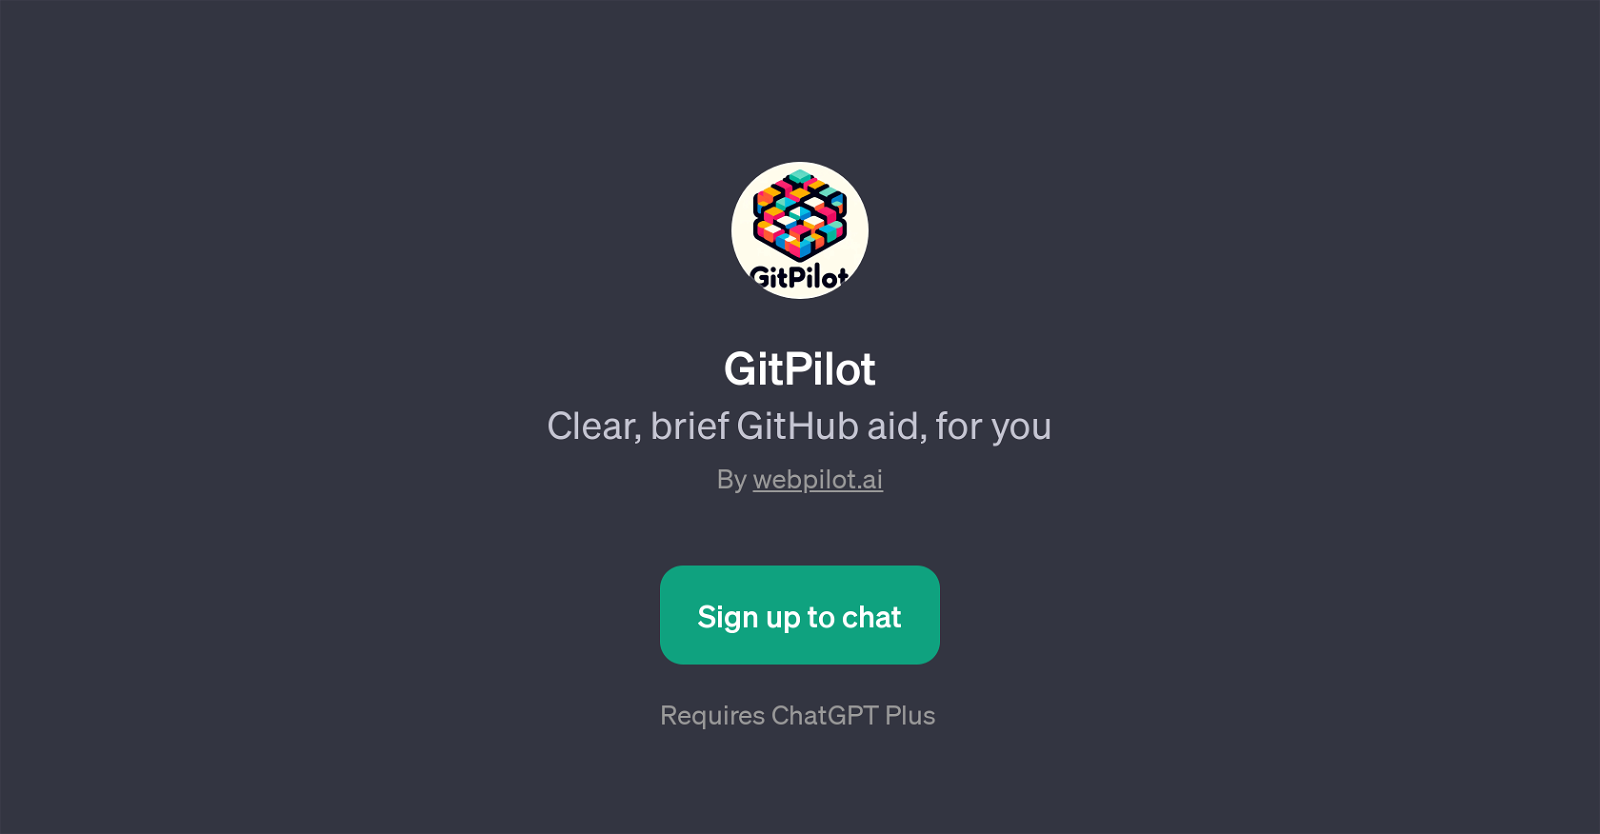 GitPilot website